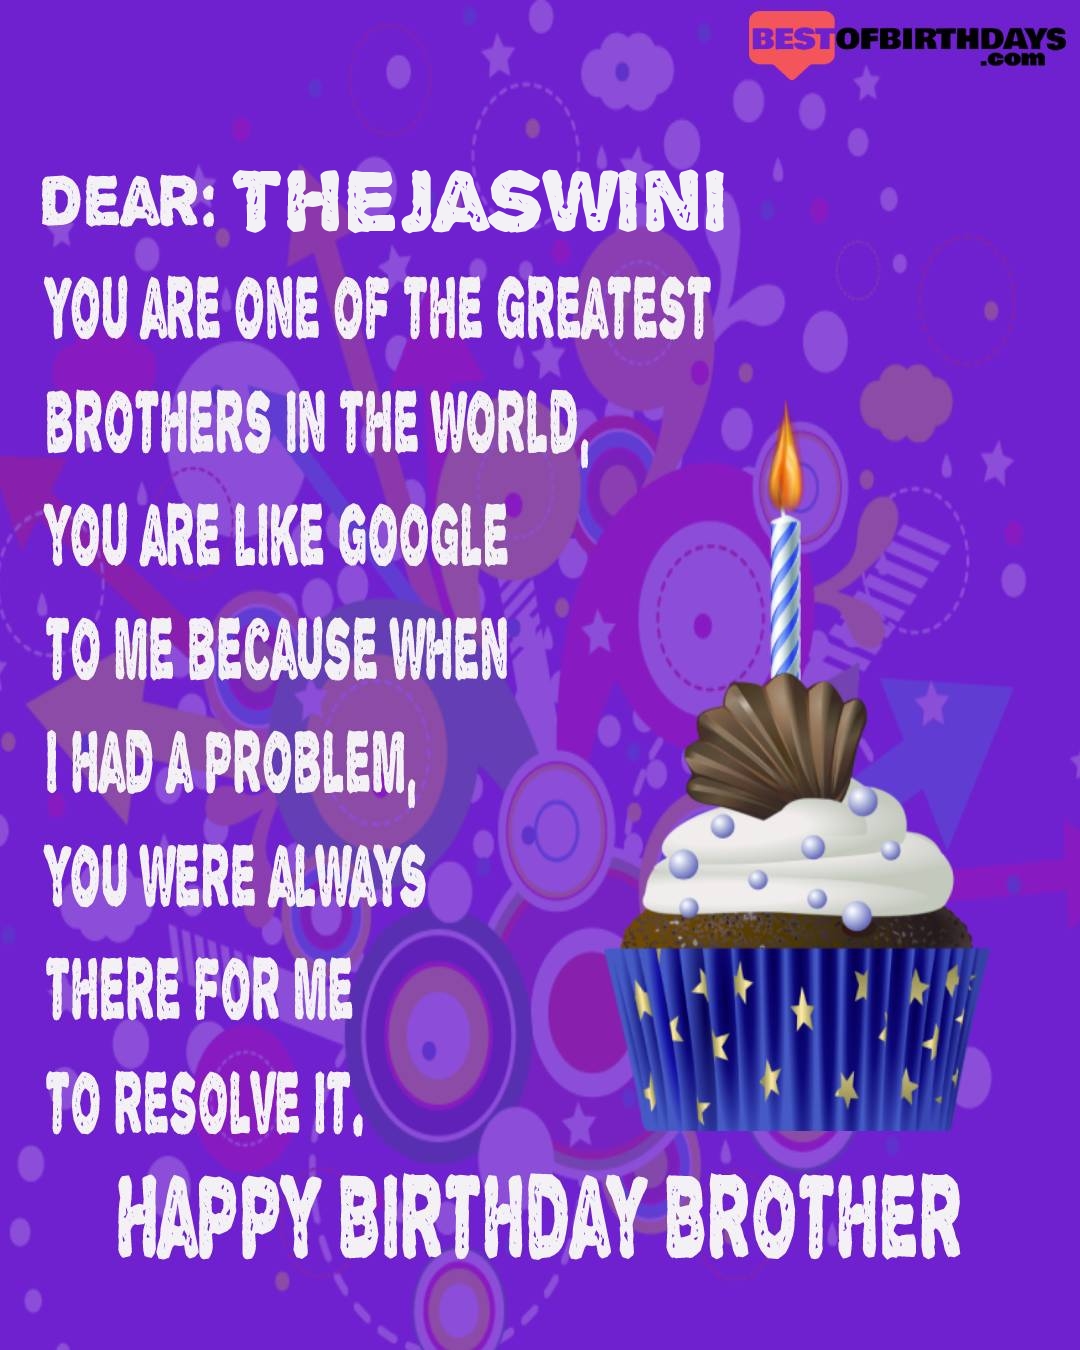 Happy birthday thejaswini bhai brother bro